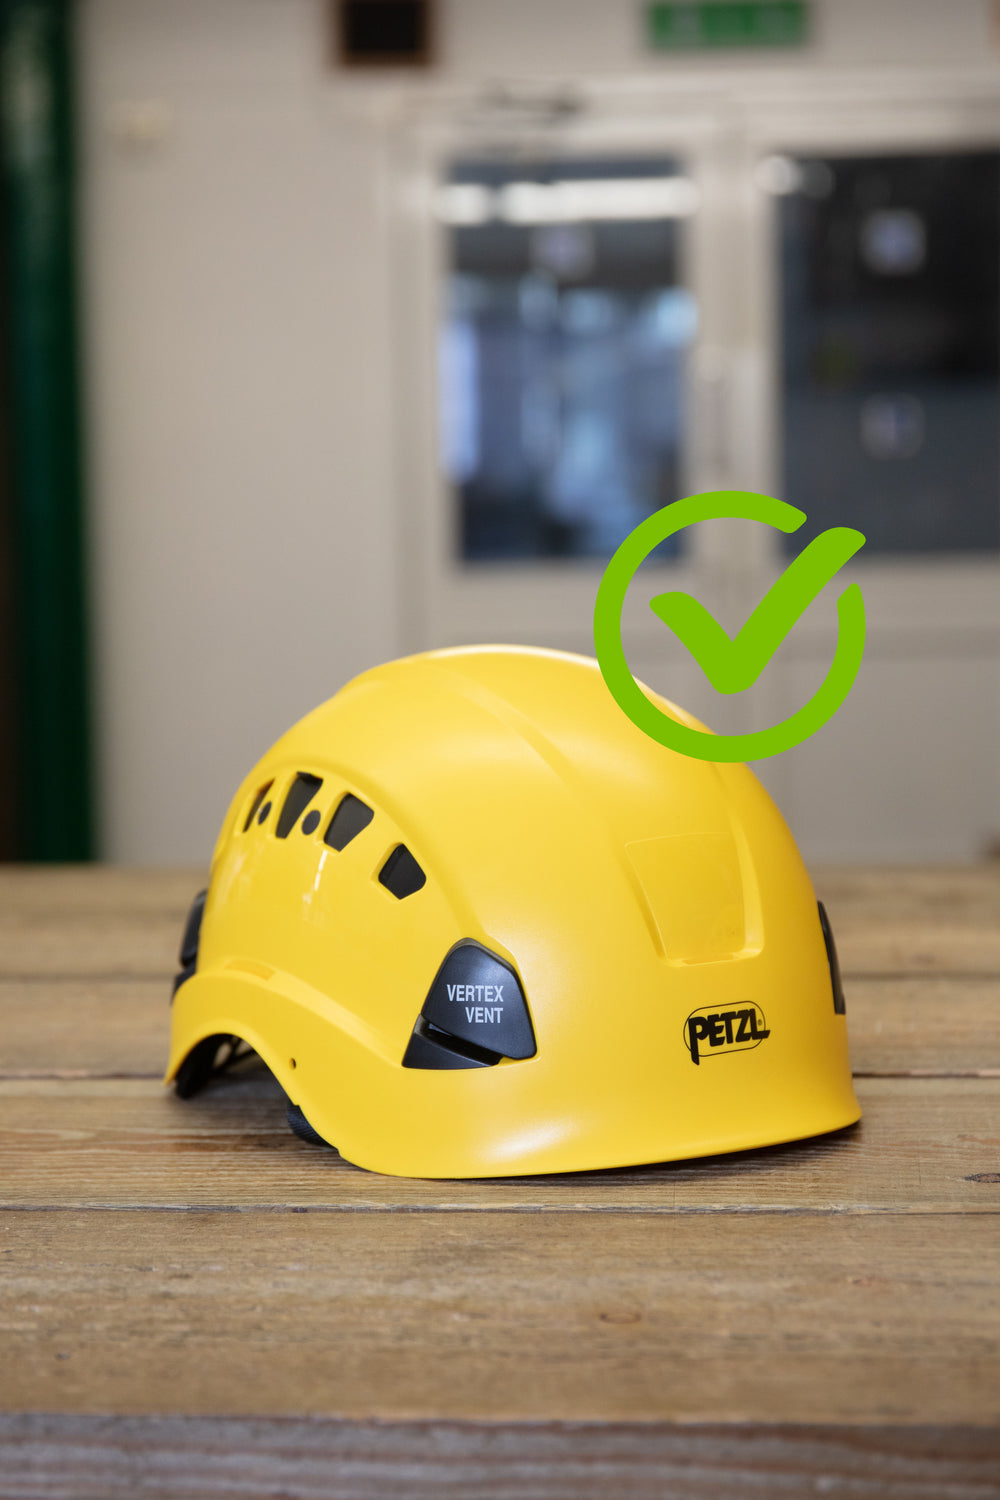 Petzl - Vizen Face Shield (Pre 2019 for Vertex and Alveo Helmets)